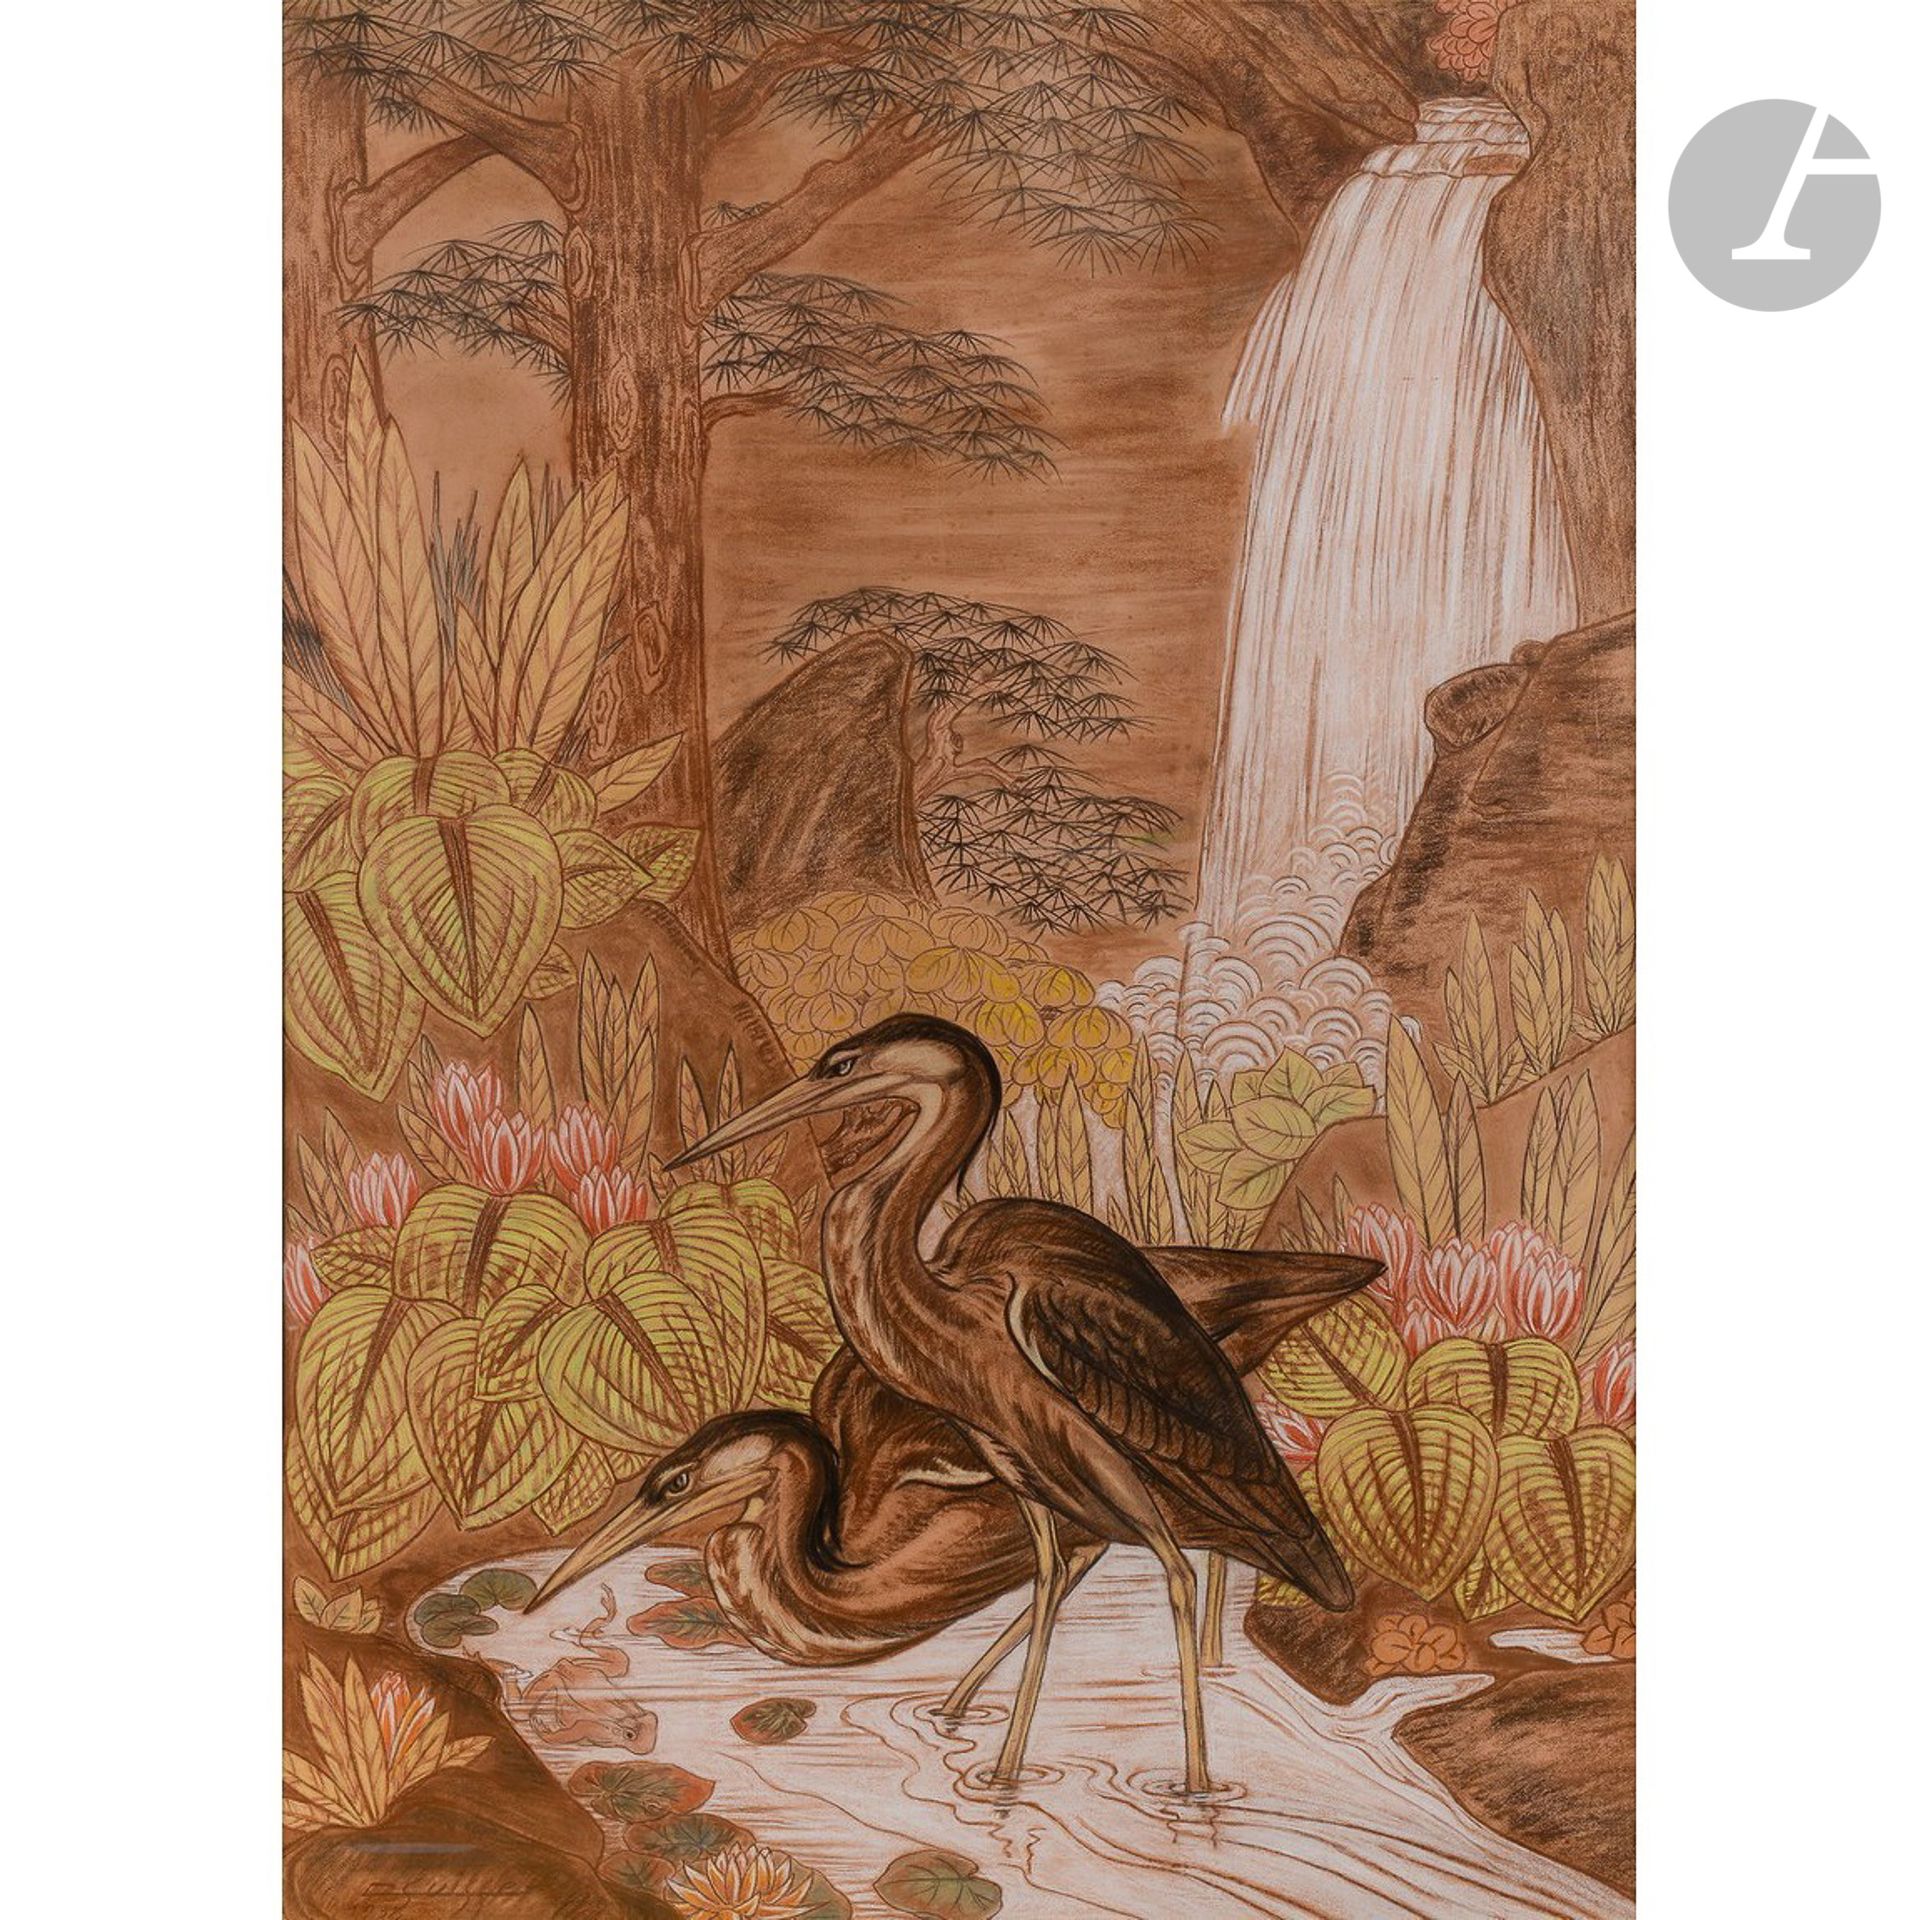 Null GASTON SUISSE (1896-1988
)在瀑布下捕鱼的苍鹭，
1935年

油画
铅笔
，木炭和粉彩画
在玻璃下
出售
，有玛丽-路易丝和&hellip;